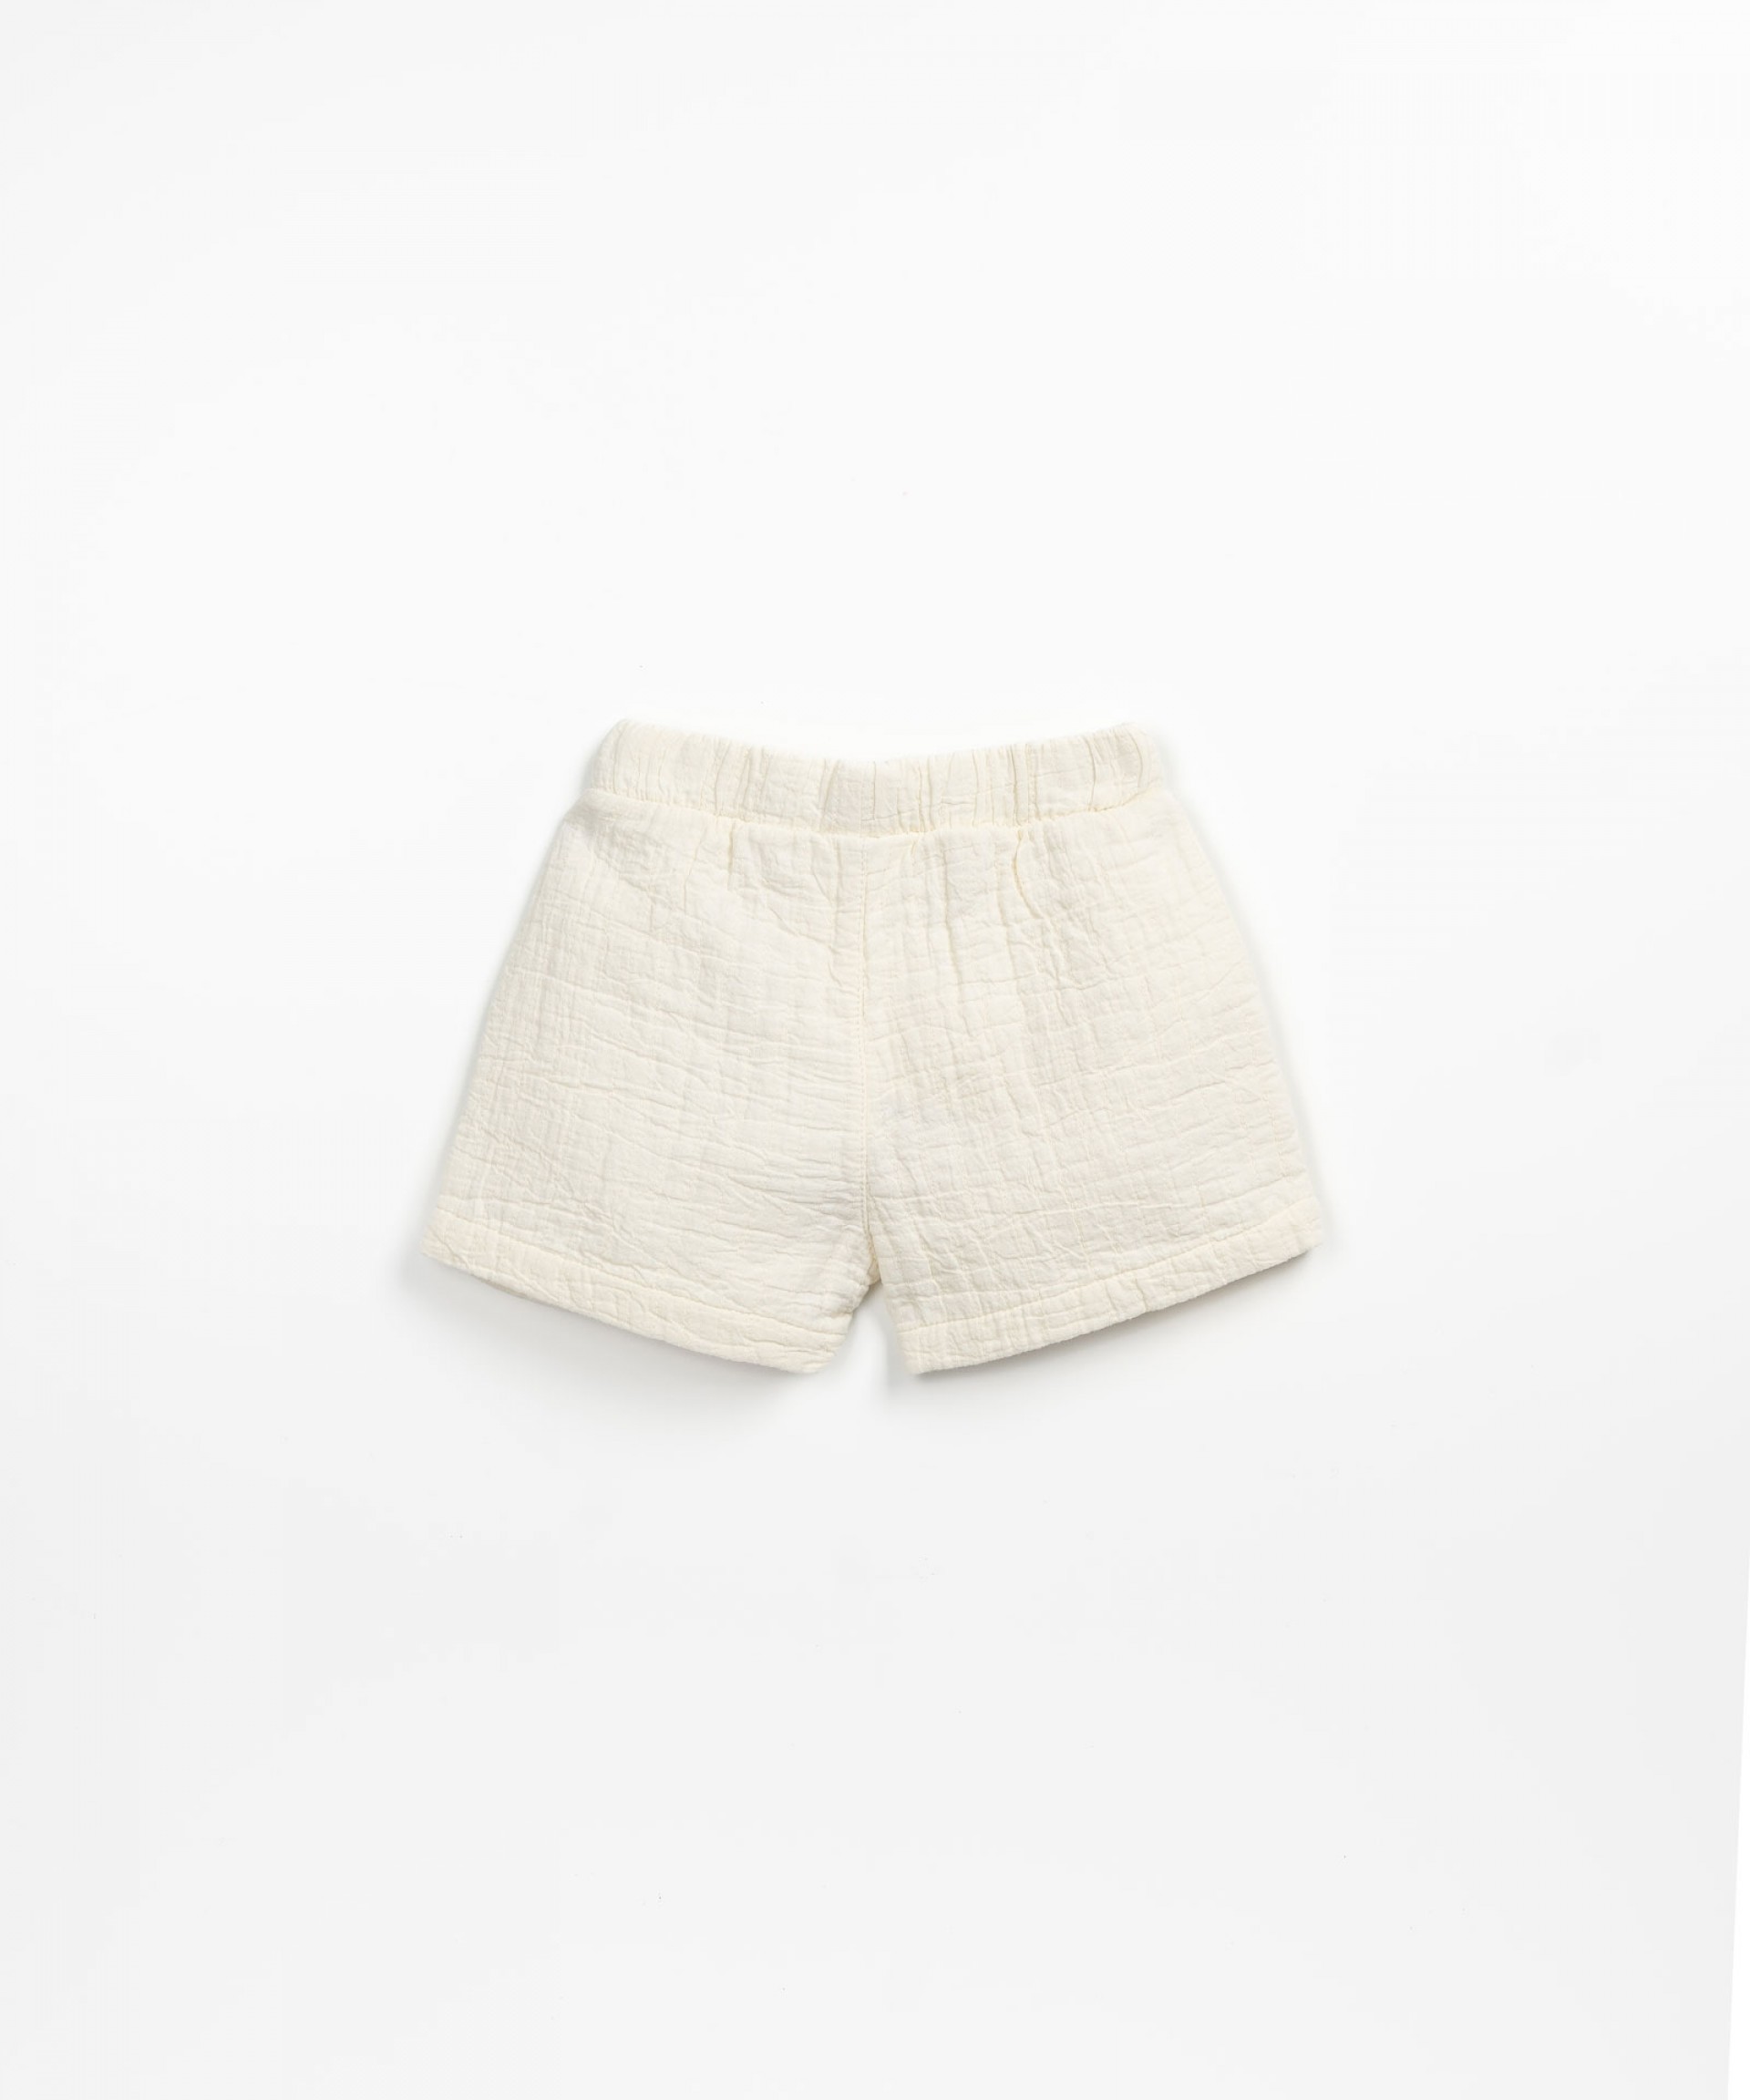 Shorts with elastic waist and decorative drawstring | Textile Art